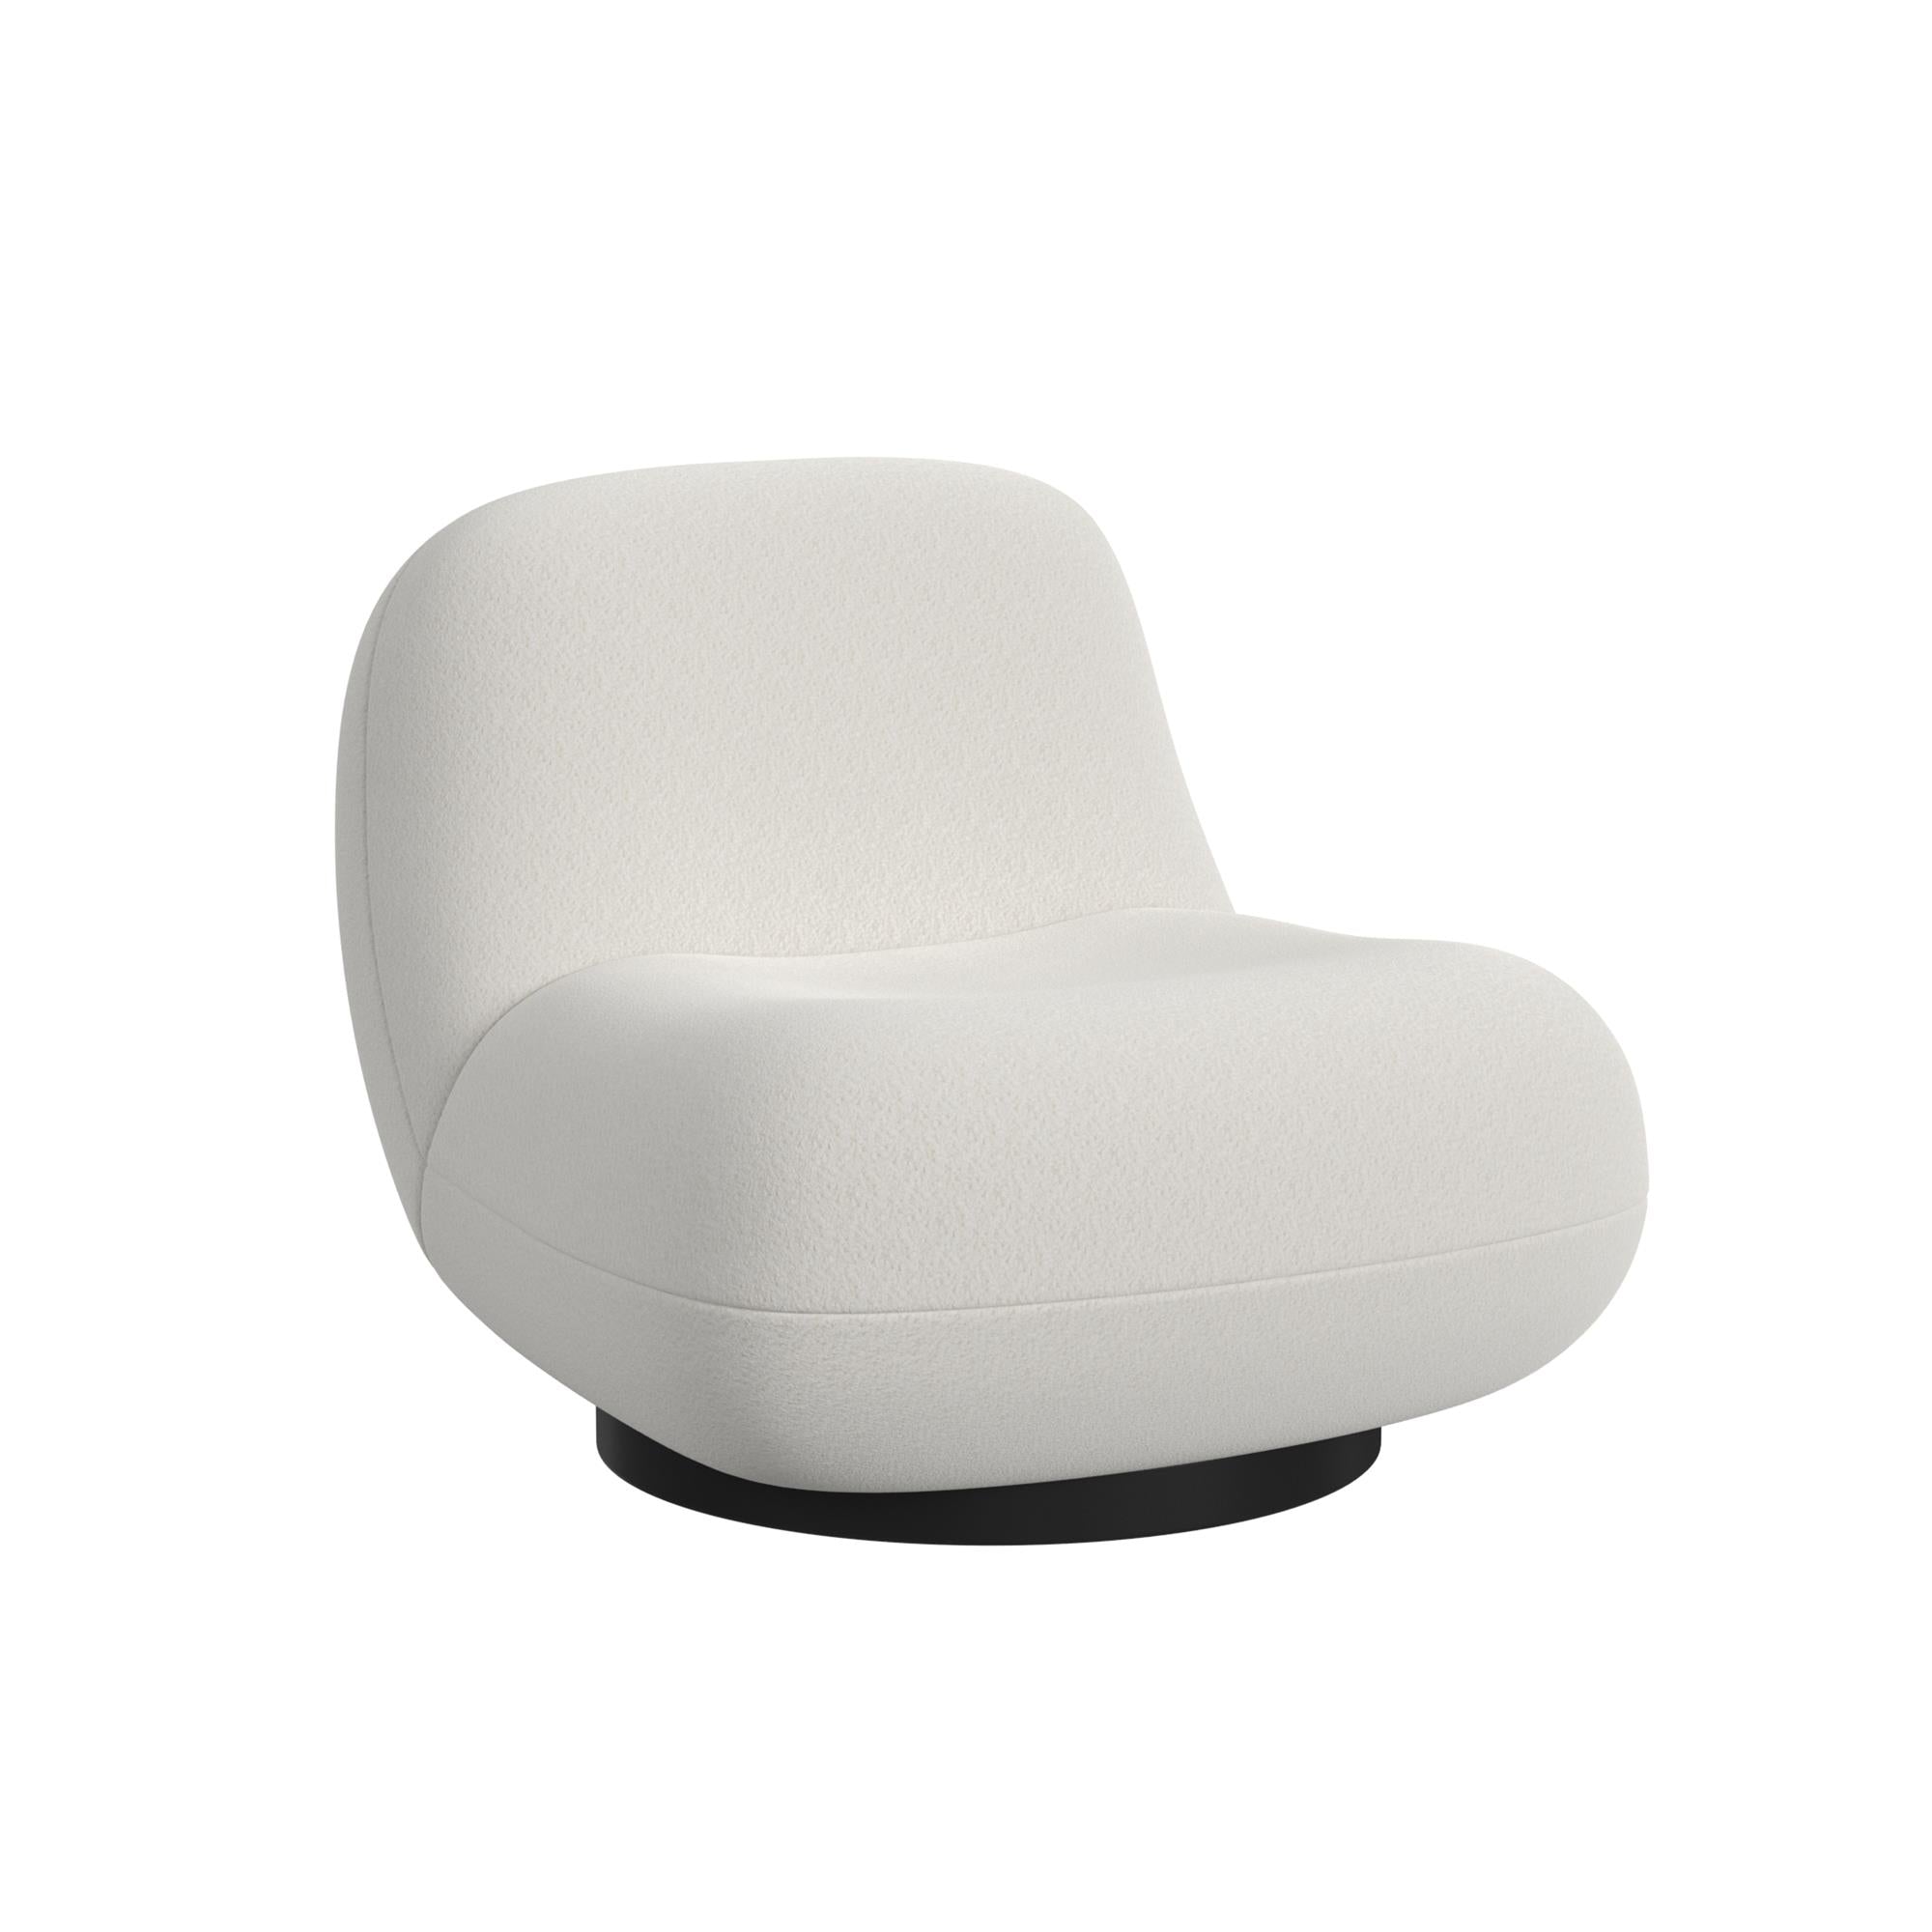  Crosby Boucle Swivel Chair - White - N/A